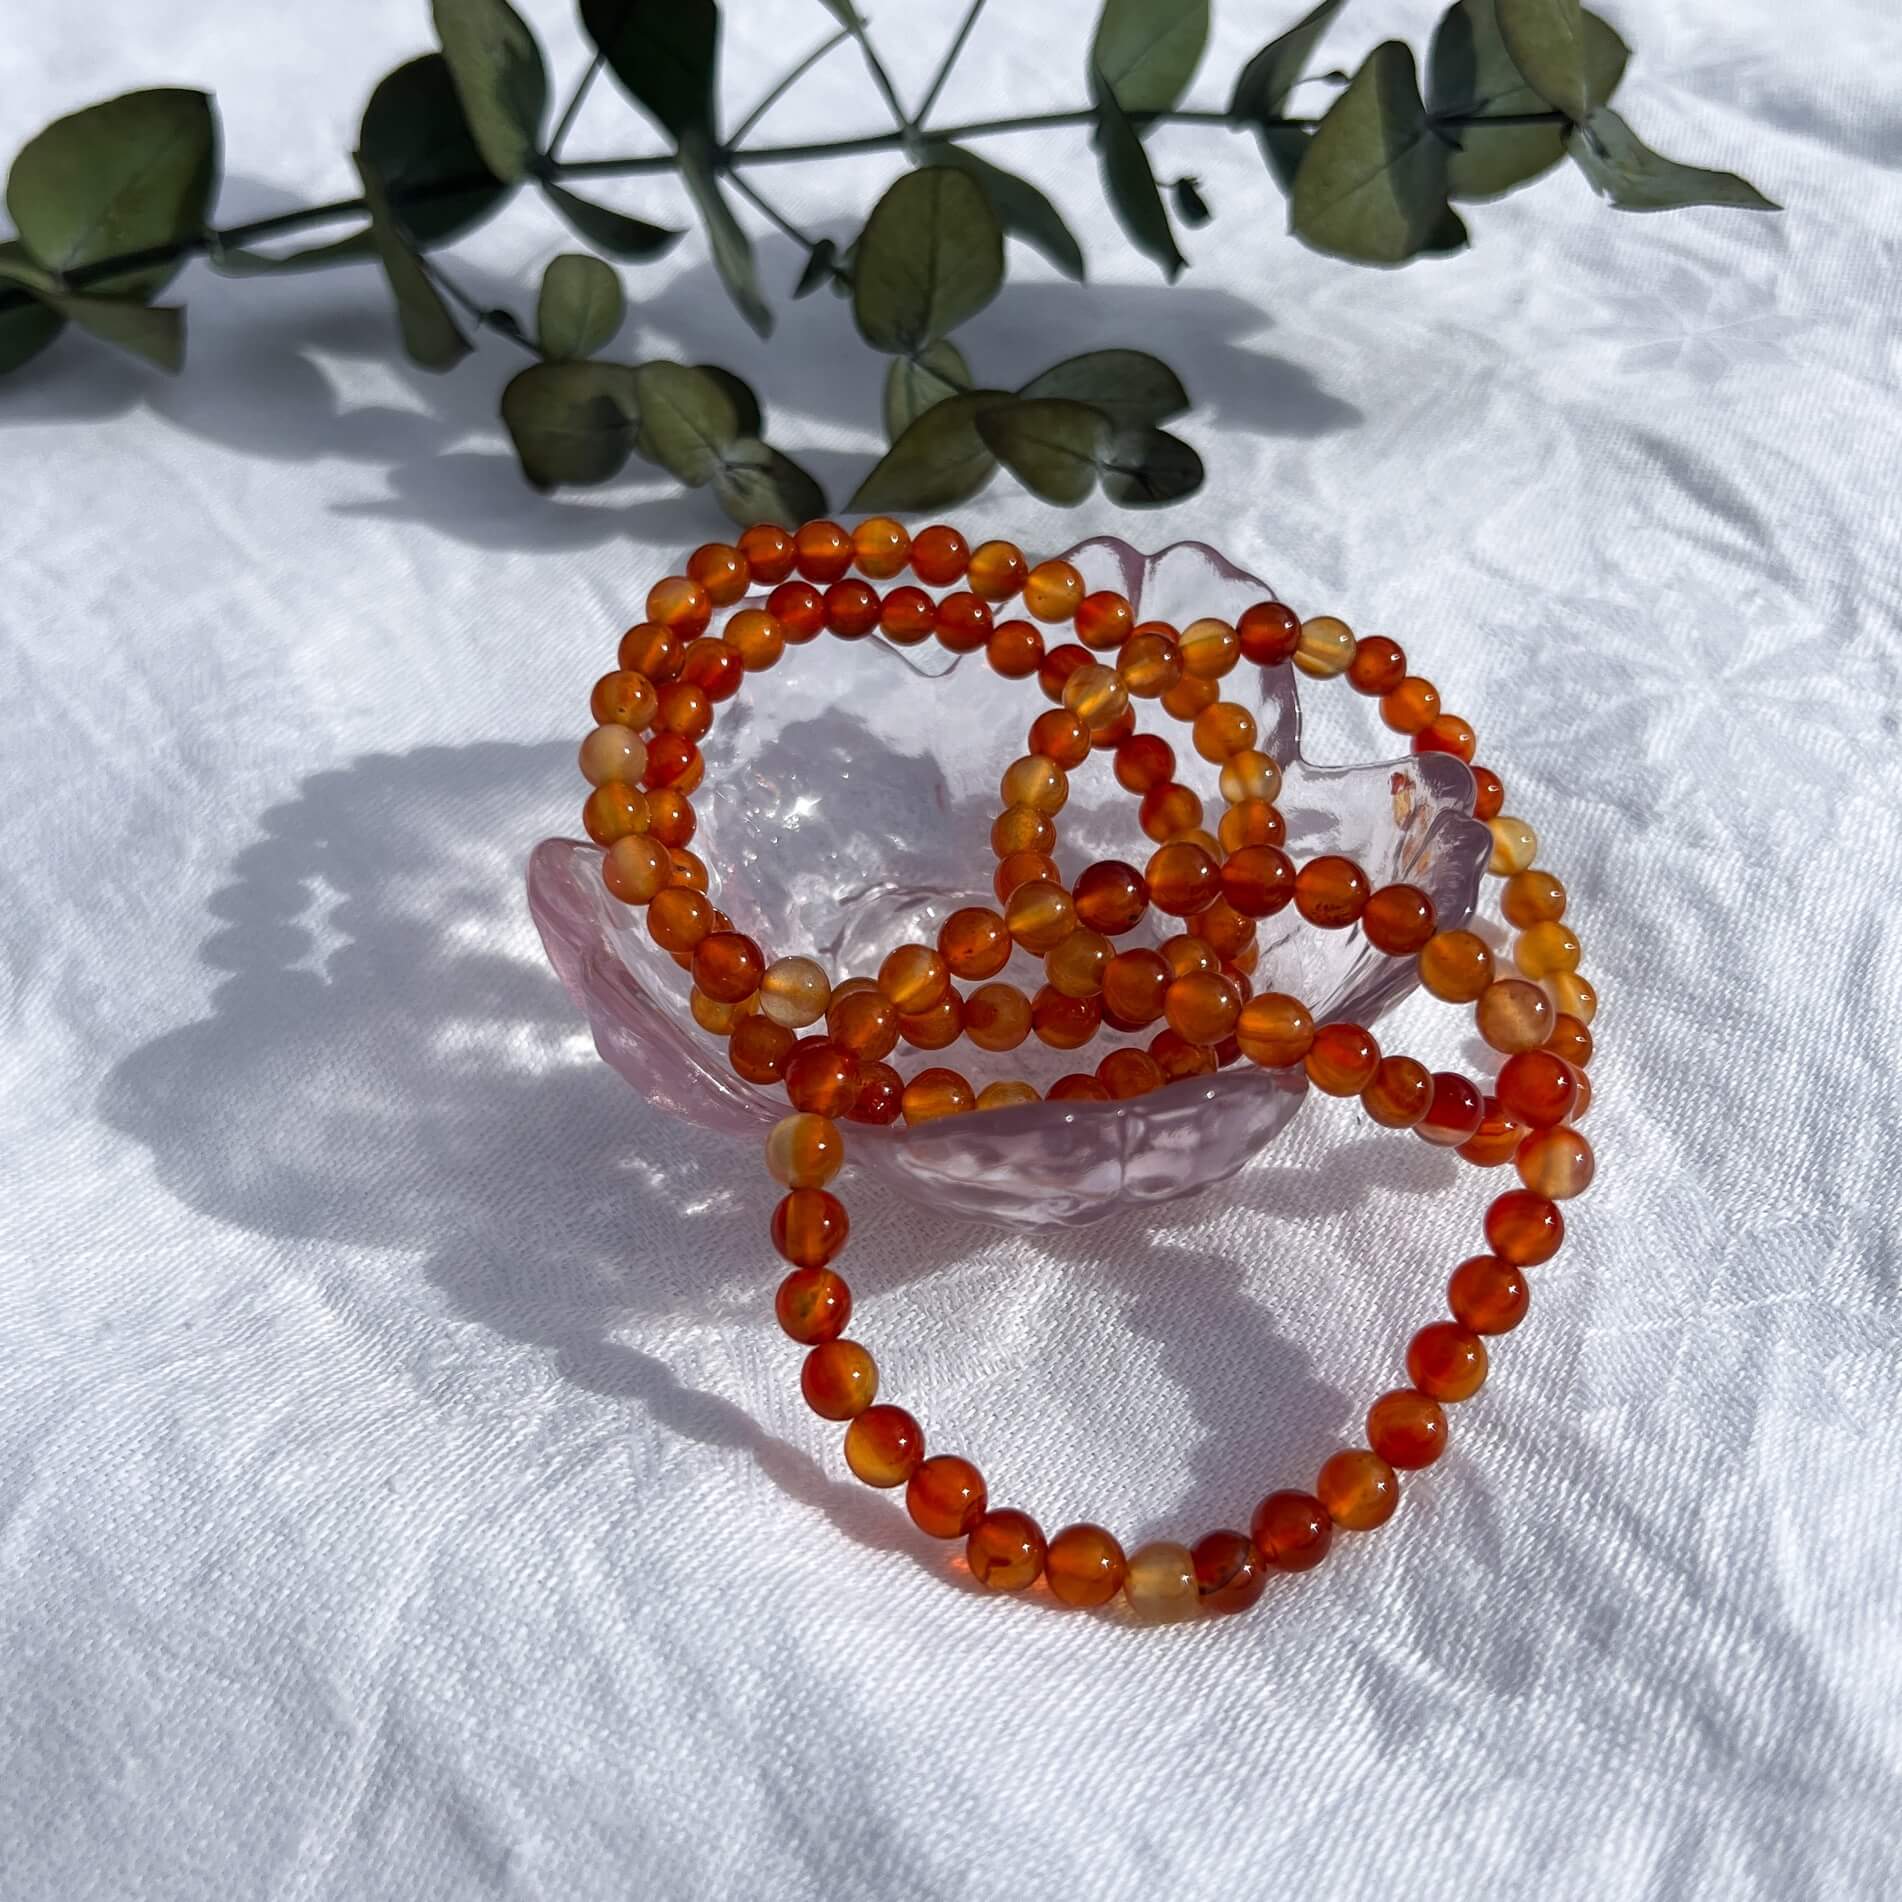 A glass trinket dish filled with vivid orange & red carnelian crystal bead bracelets